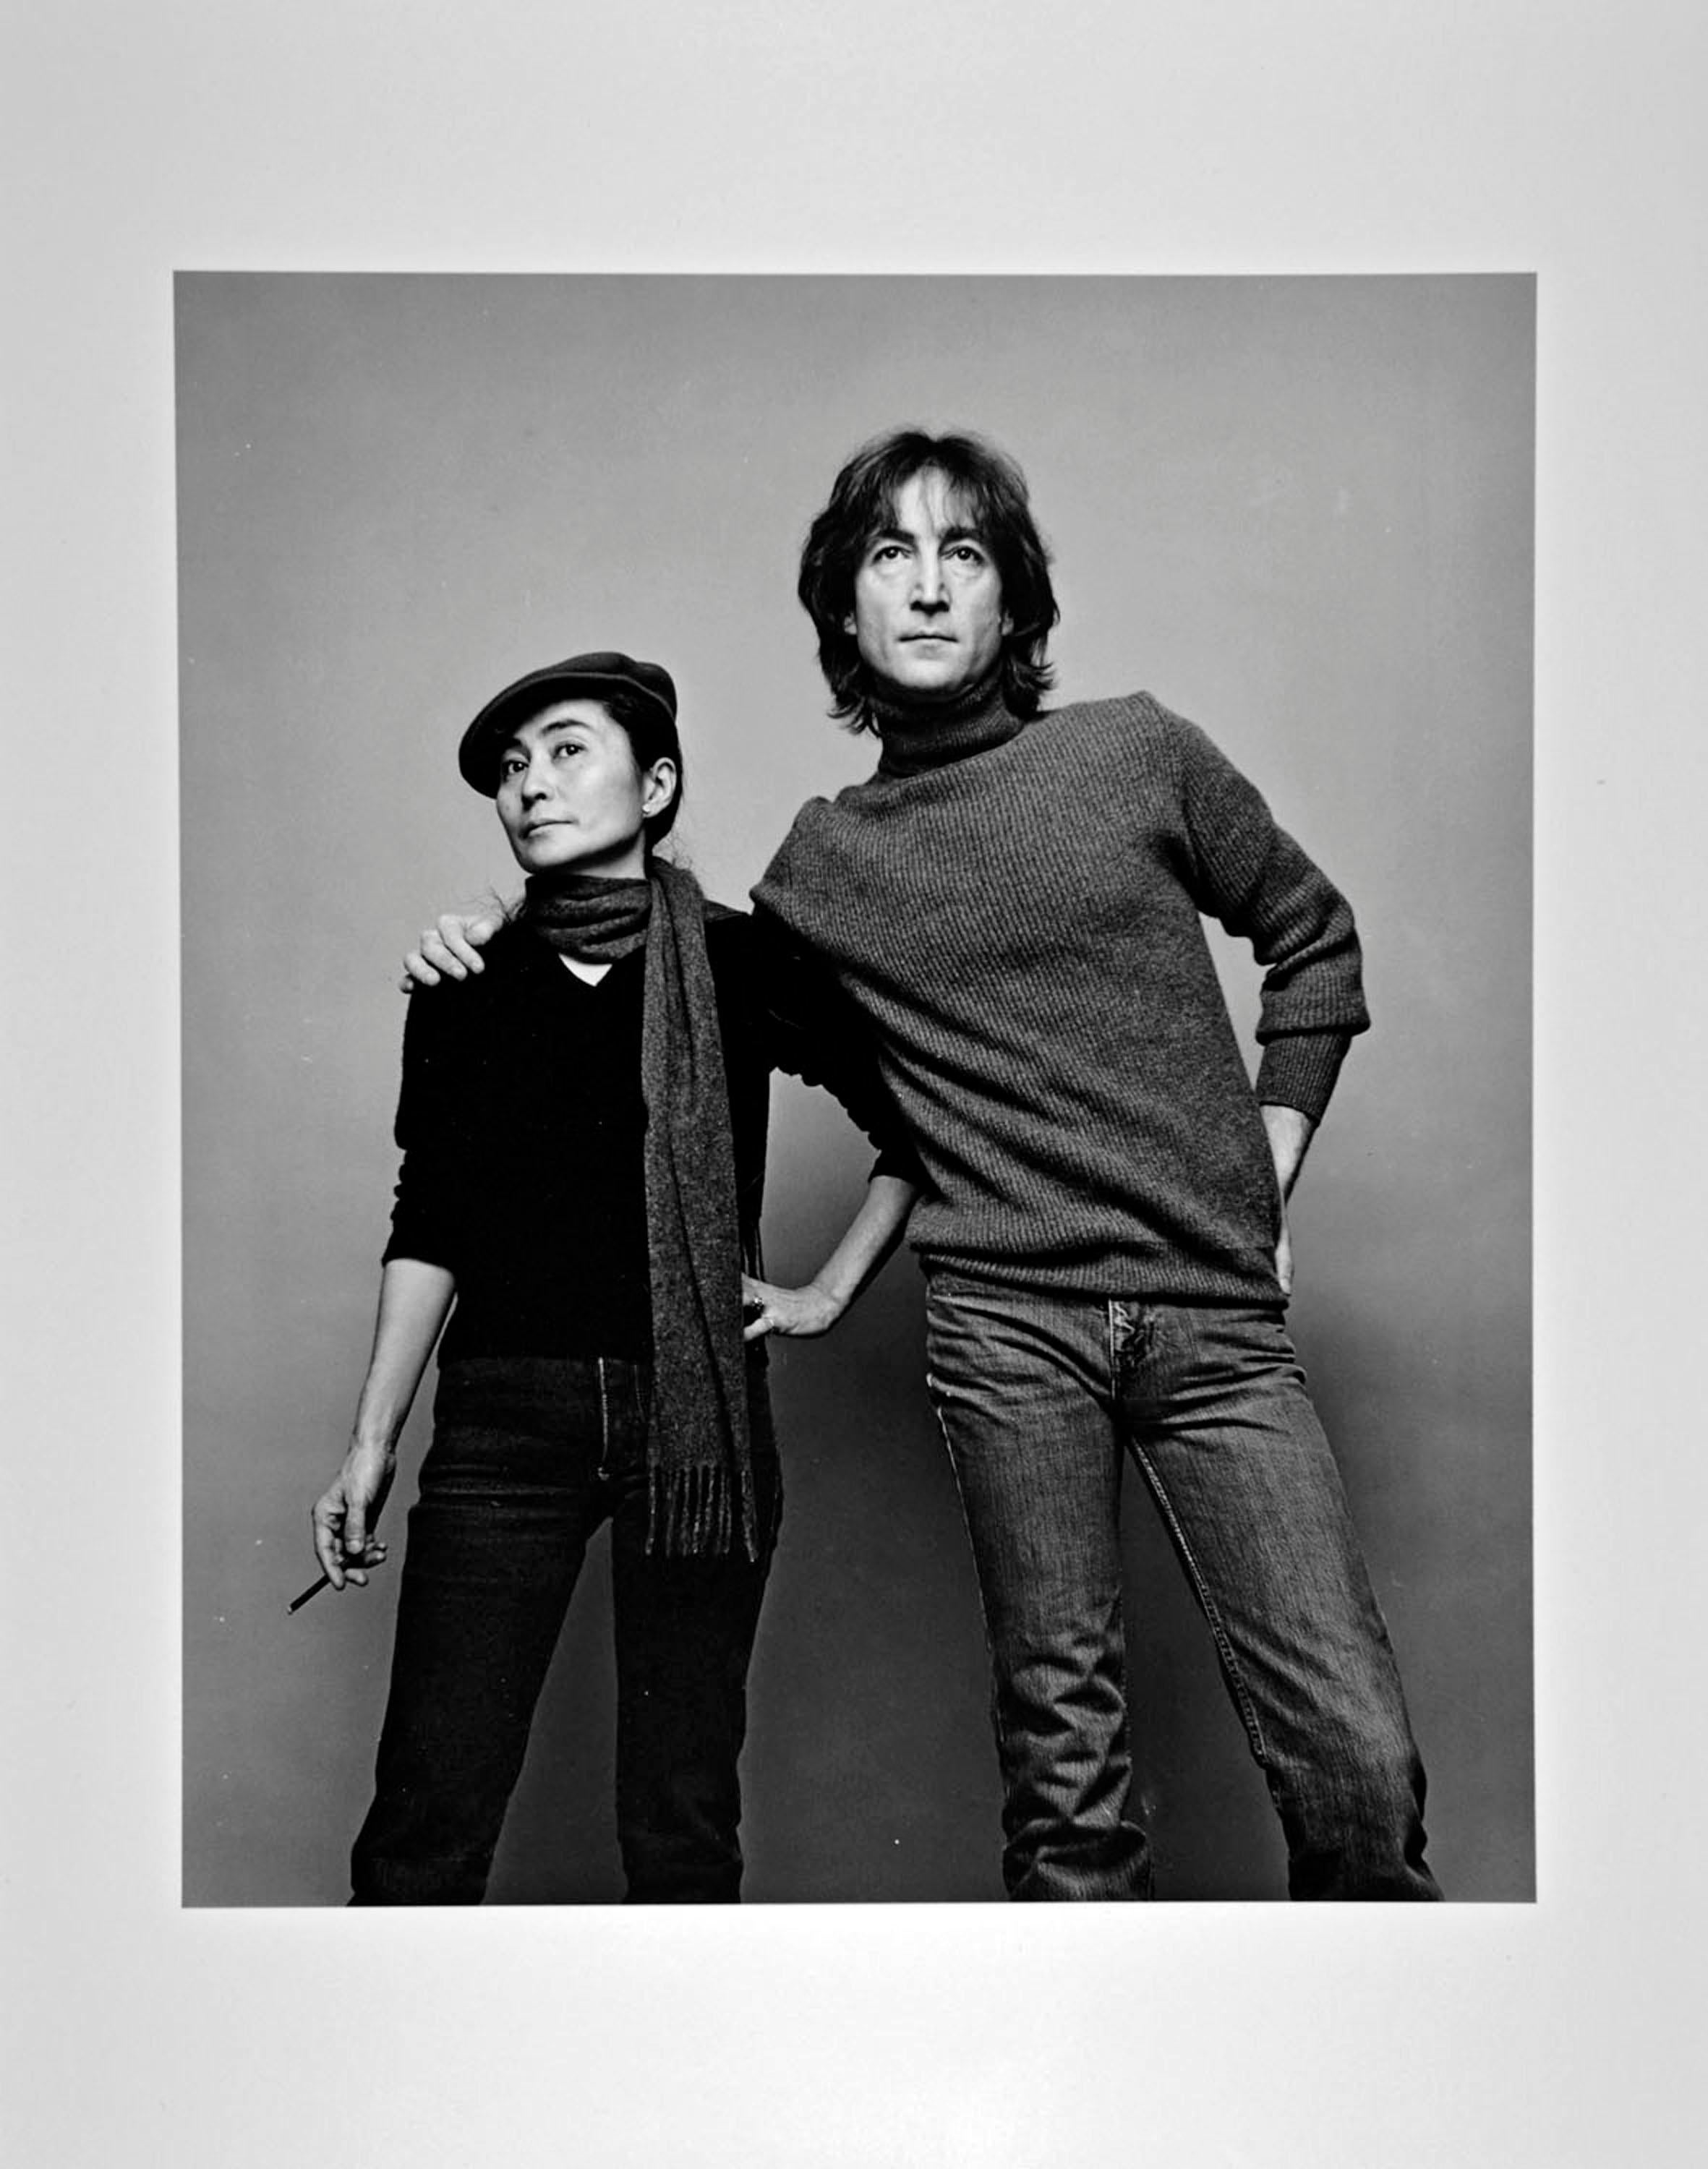 Jack Mitchell Black and White Photograph - John Lennon and Yoko Ono photographed November 2, 1980. 